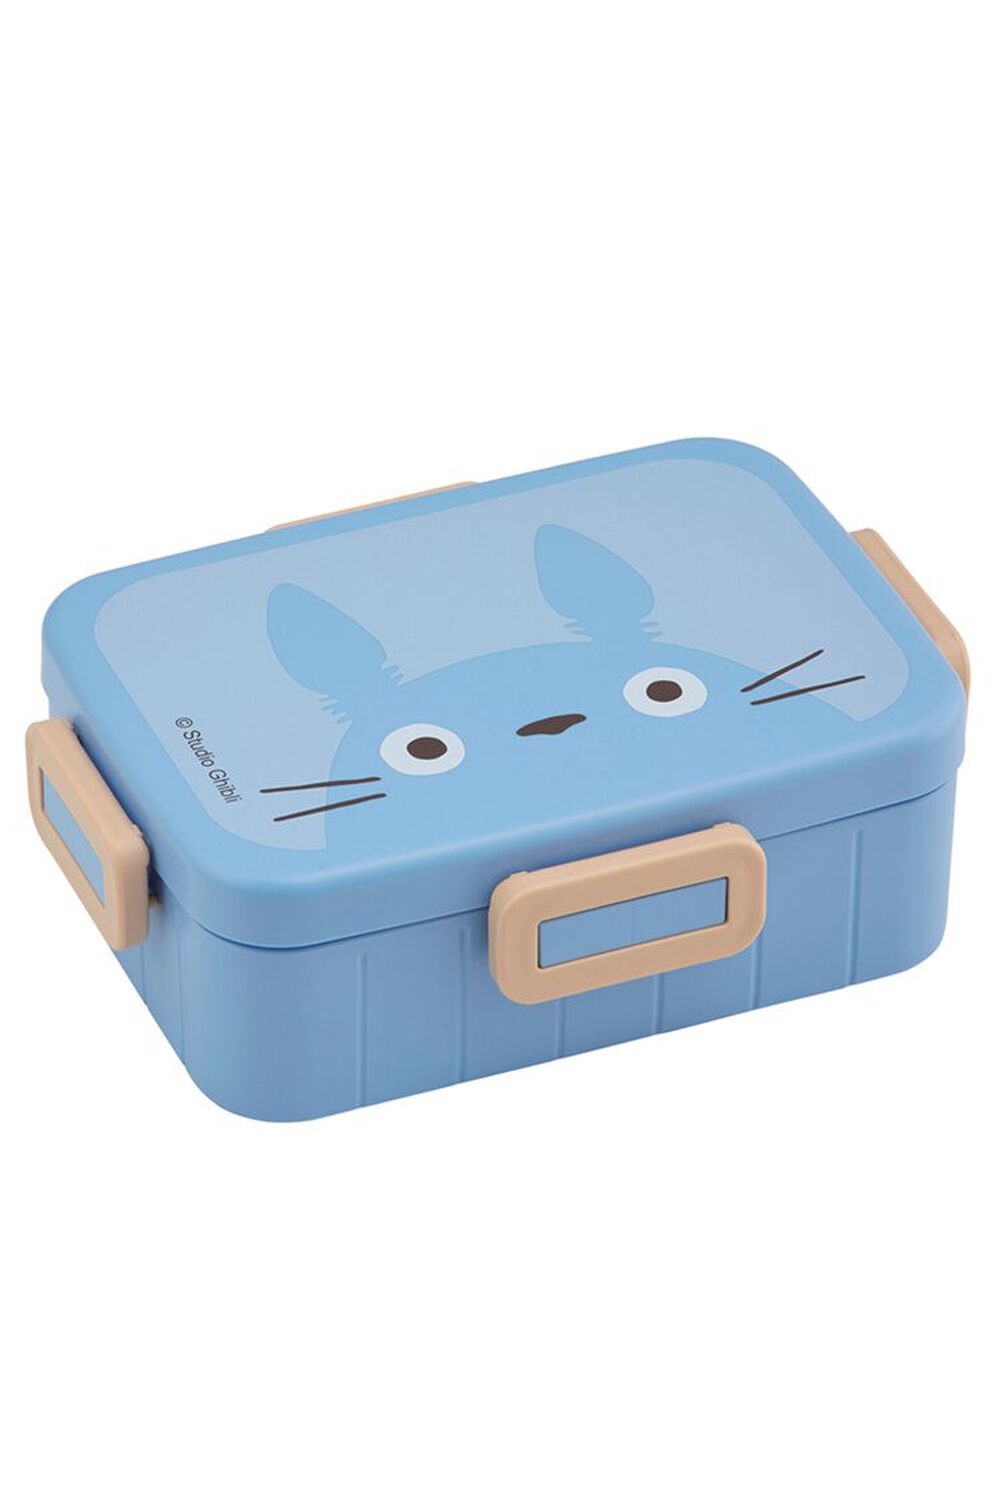 My Neighbor Totoro Bento Lunch Box, image 3